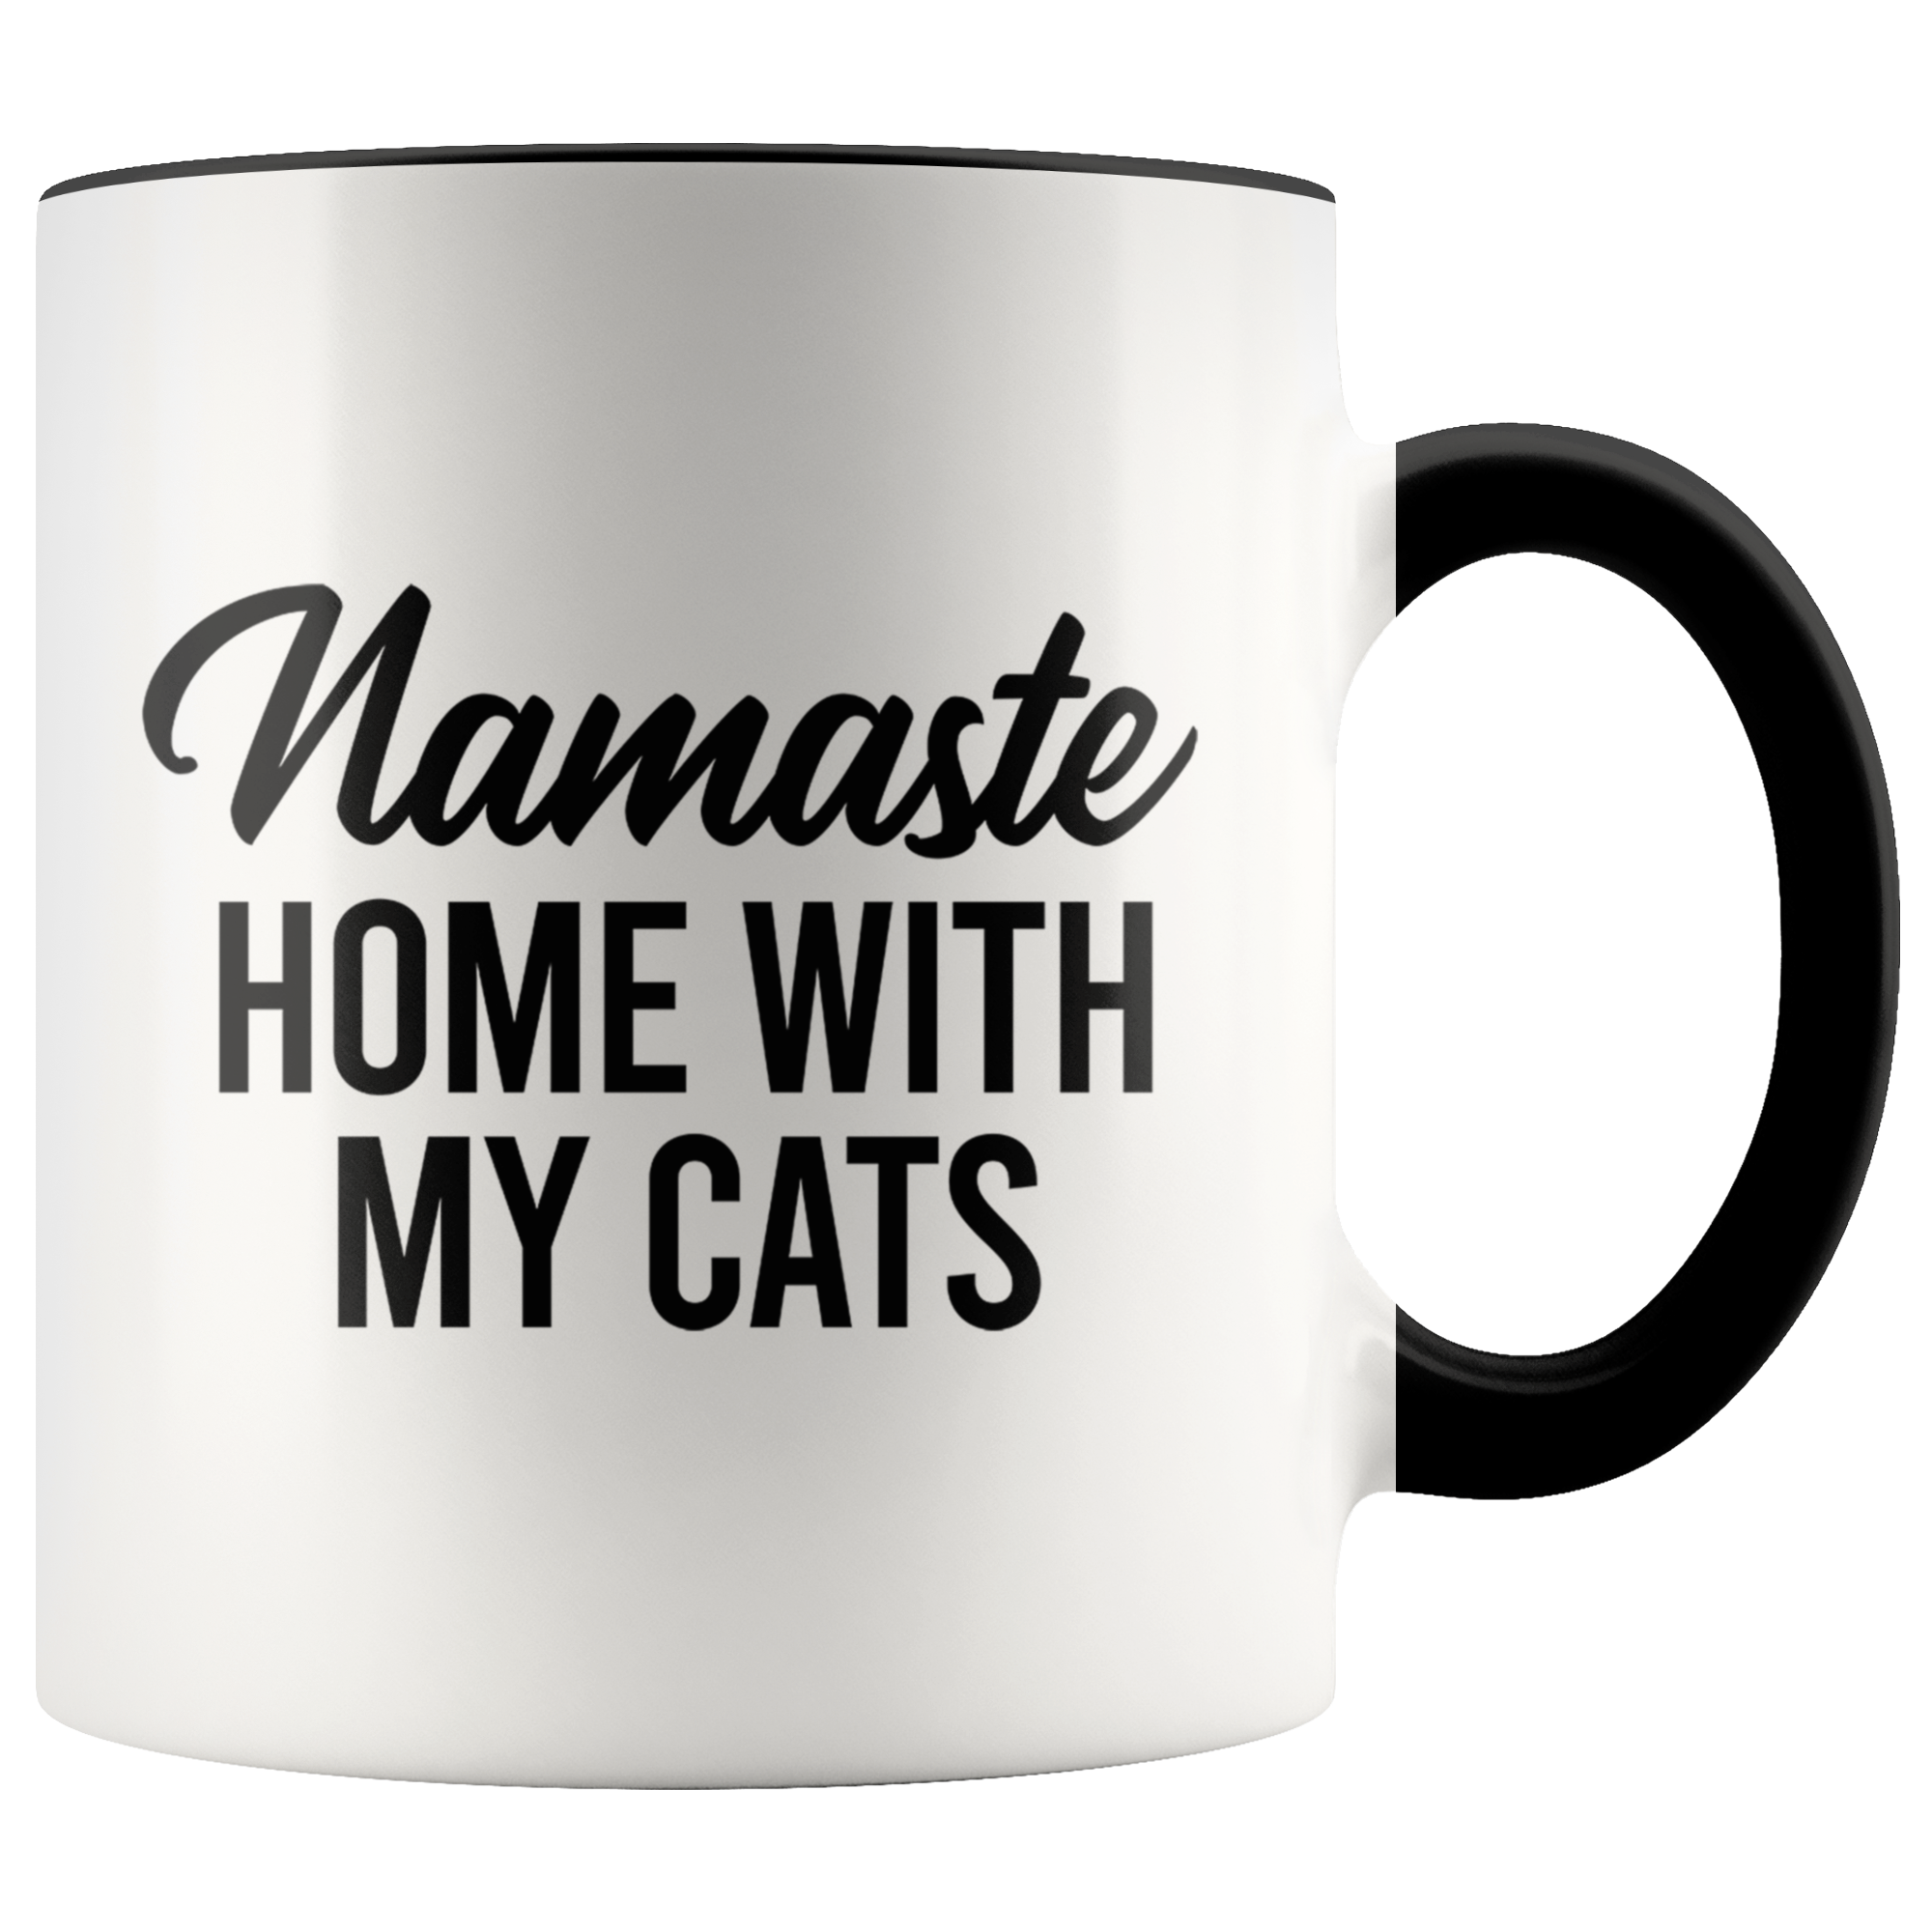 Namaste Home With My Cats Mug